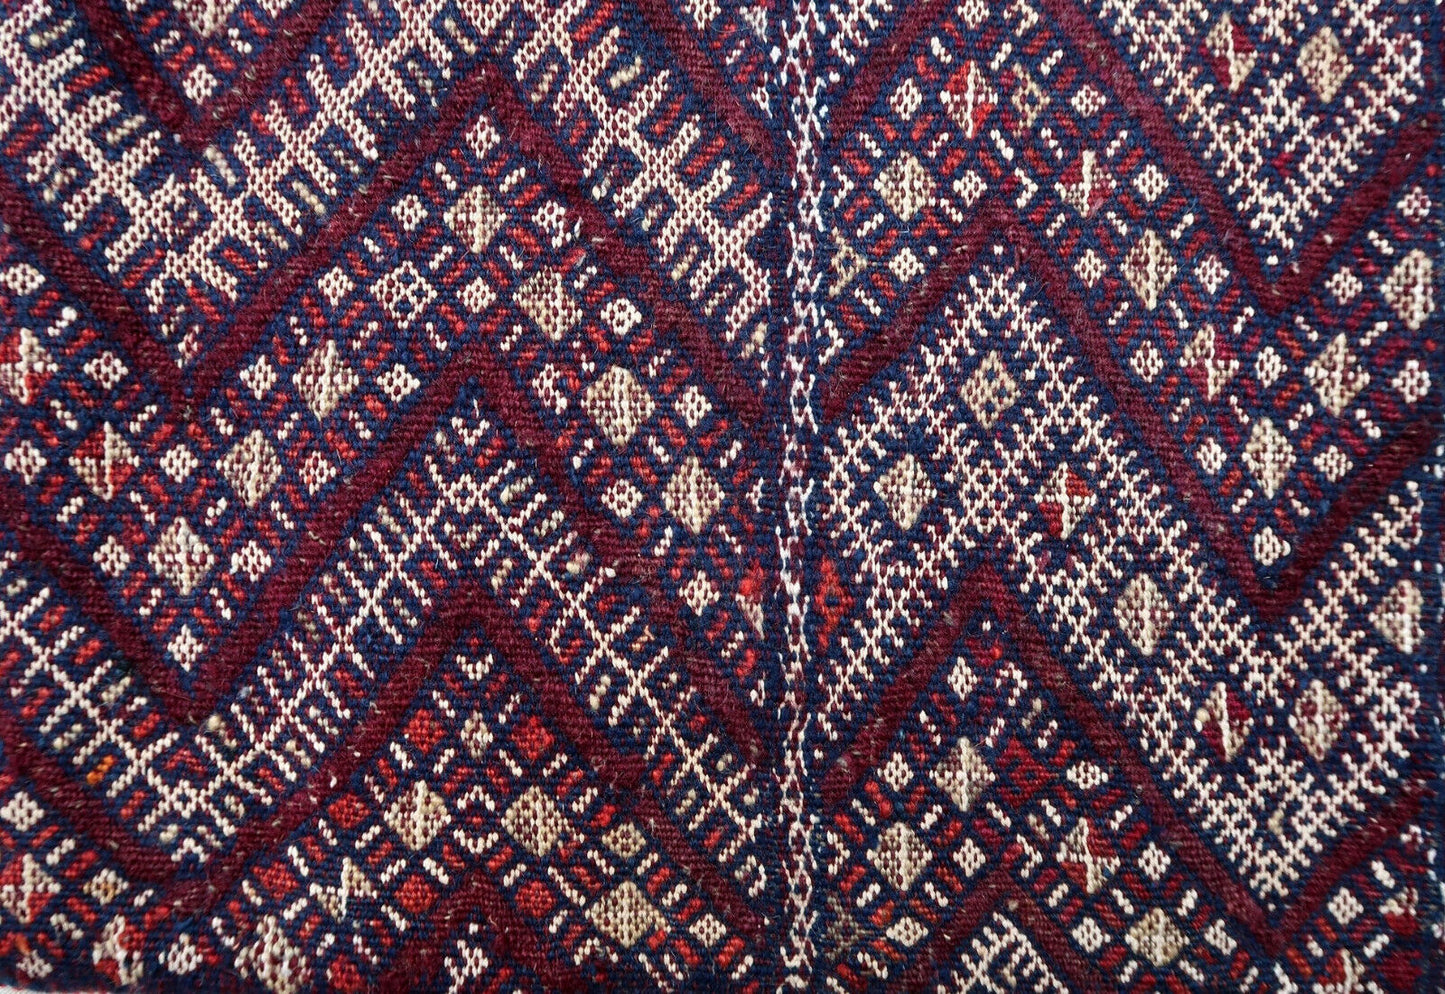 Handmade vintage Moroccan Berber kilim cushion 1.4' x 2.7' (43cm x 83cm) 1950s - 1P42